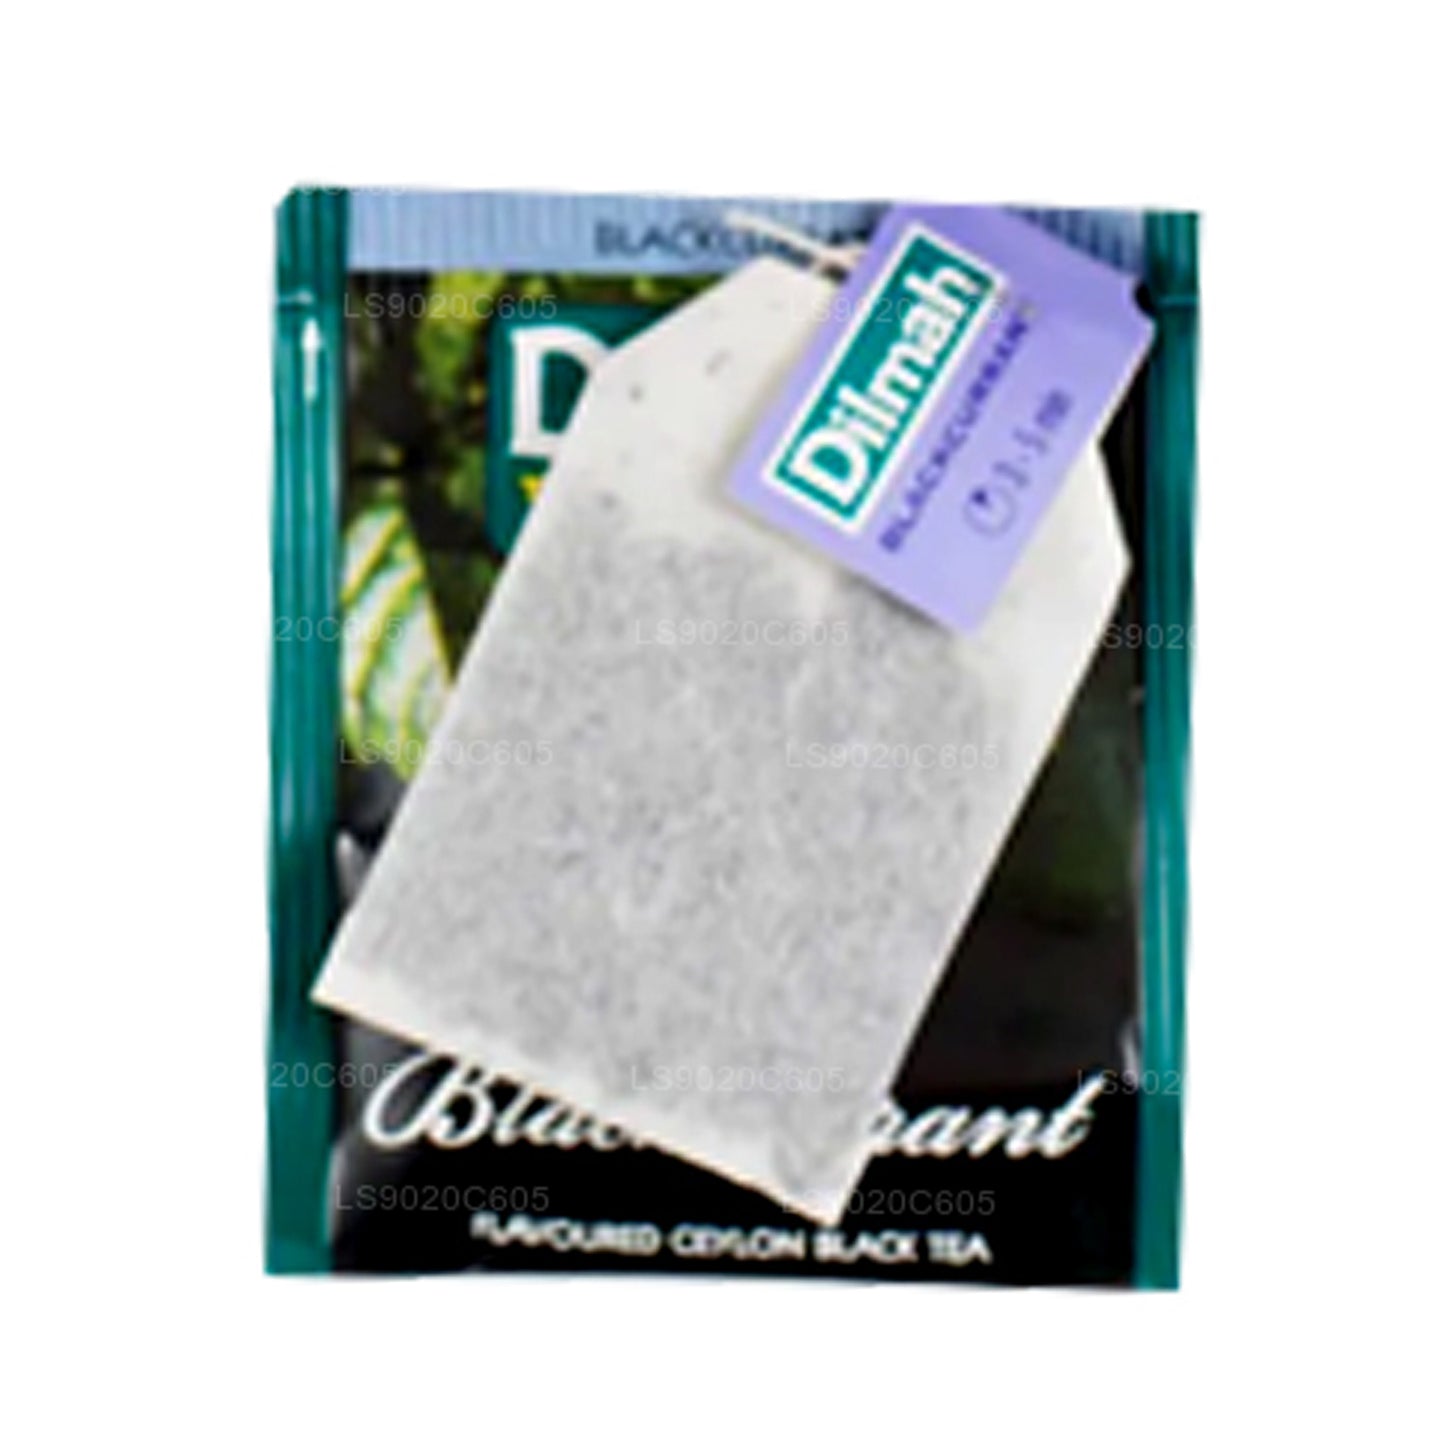 Dilmah Blackcurrant Flavored Tea (40g) 20 Tea Bags